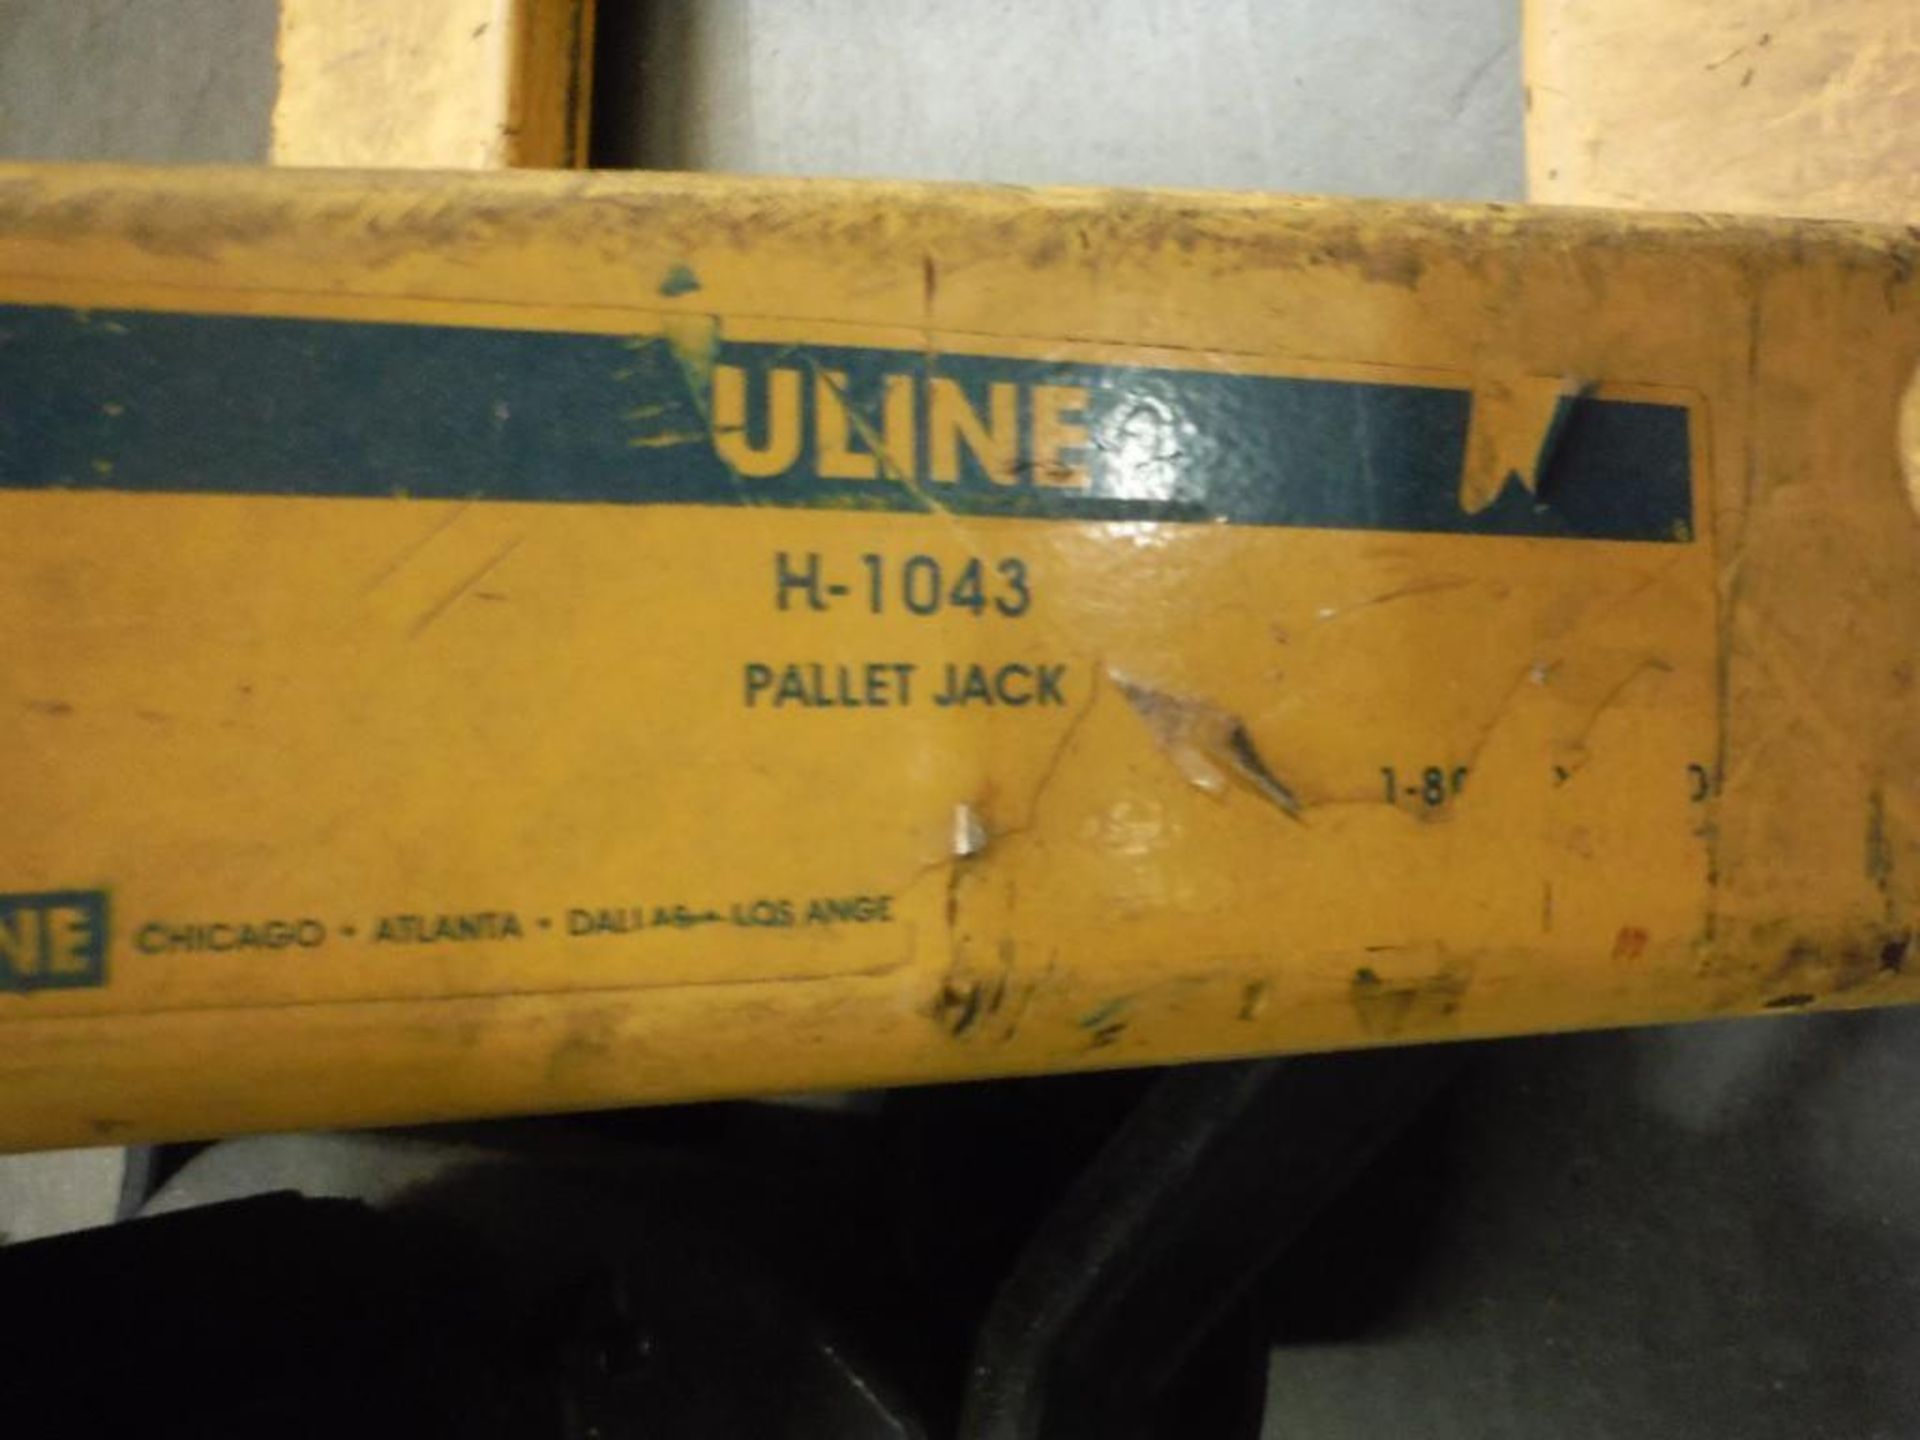 Uline hand pallet jack, Model H-1043, 5500 lb. capacity. - RIGGING FEE FOR DOMESTIC TRANSPORT $25 - Image 3 of 3